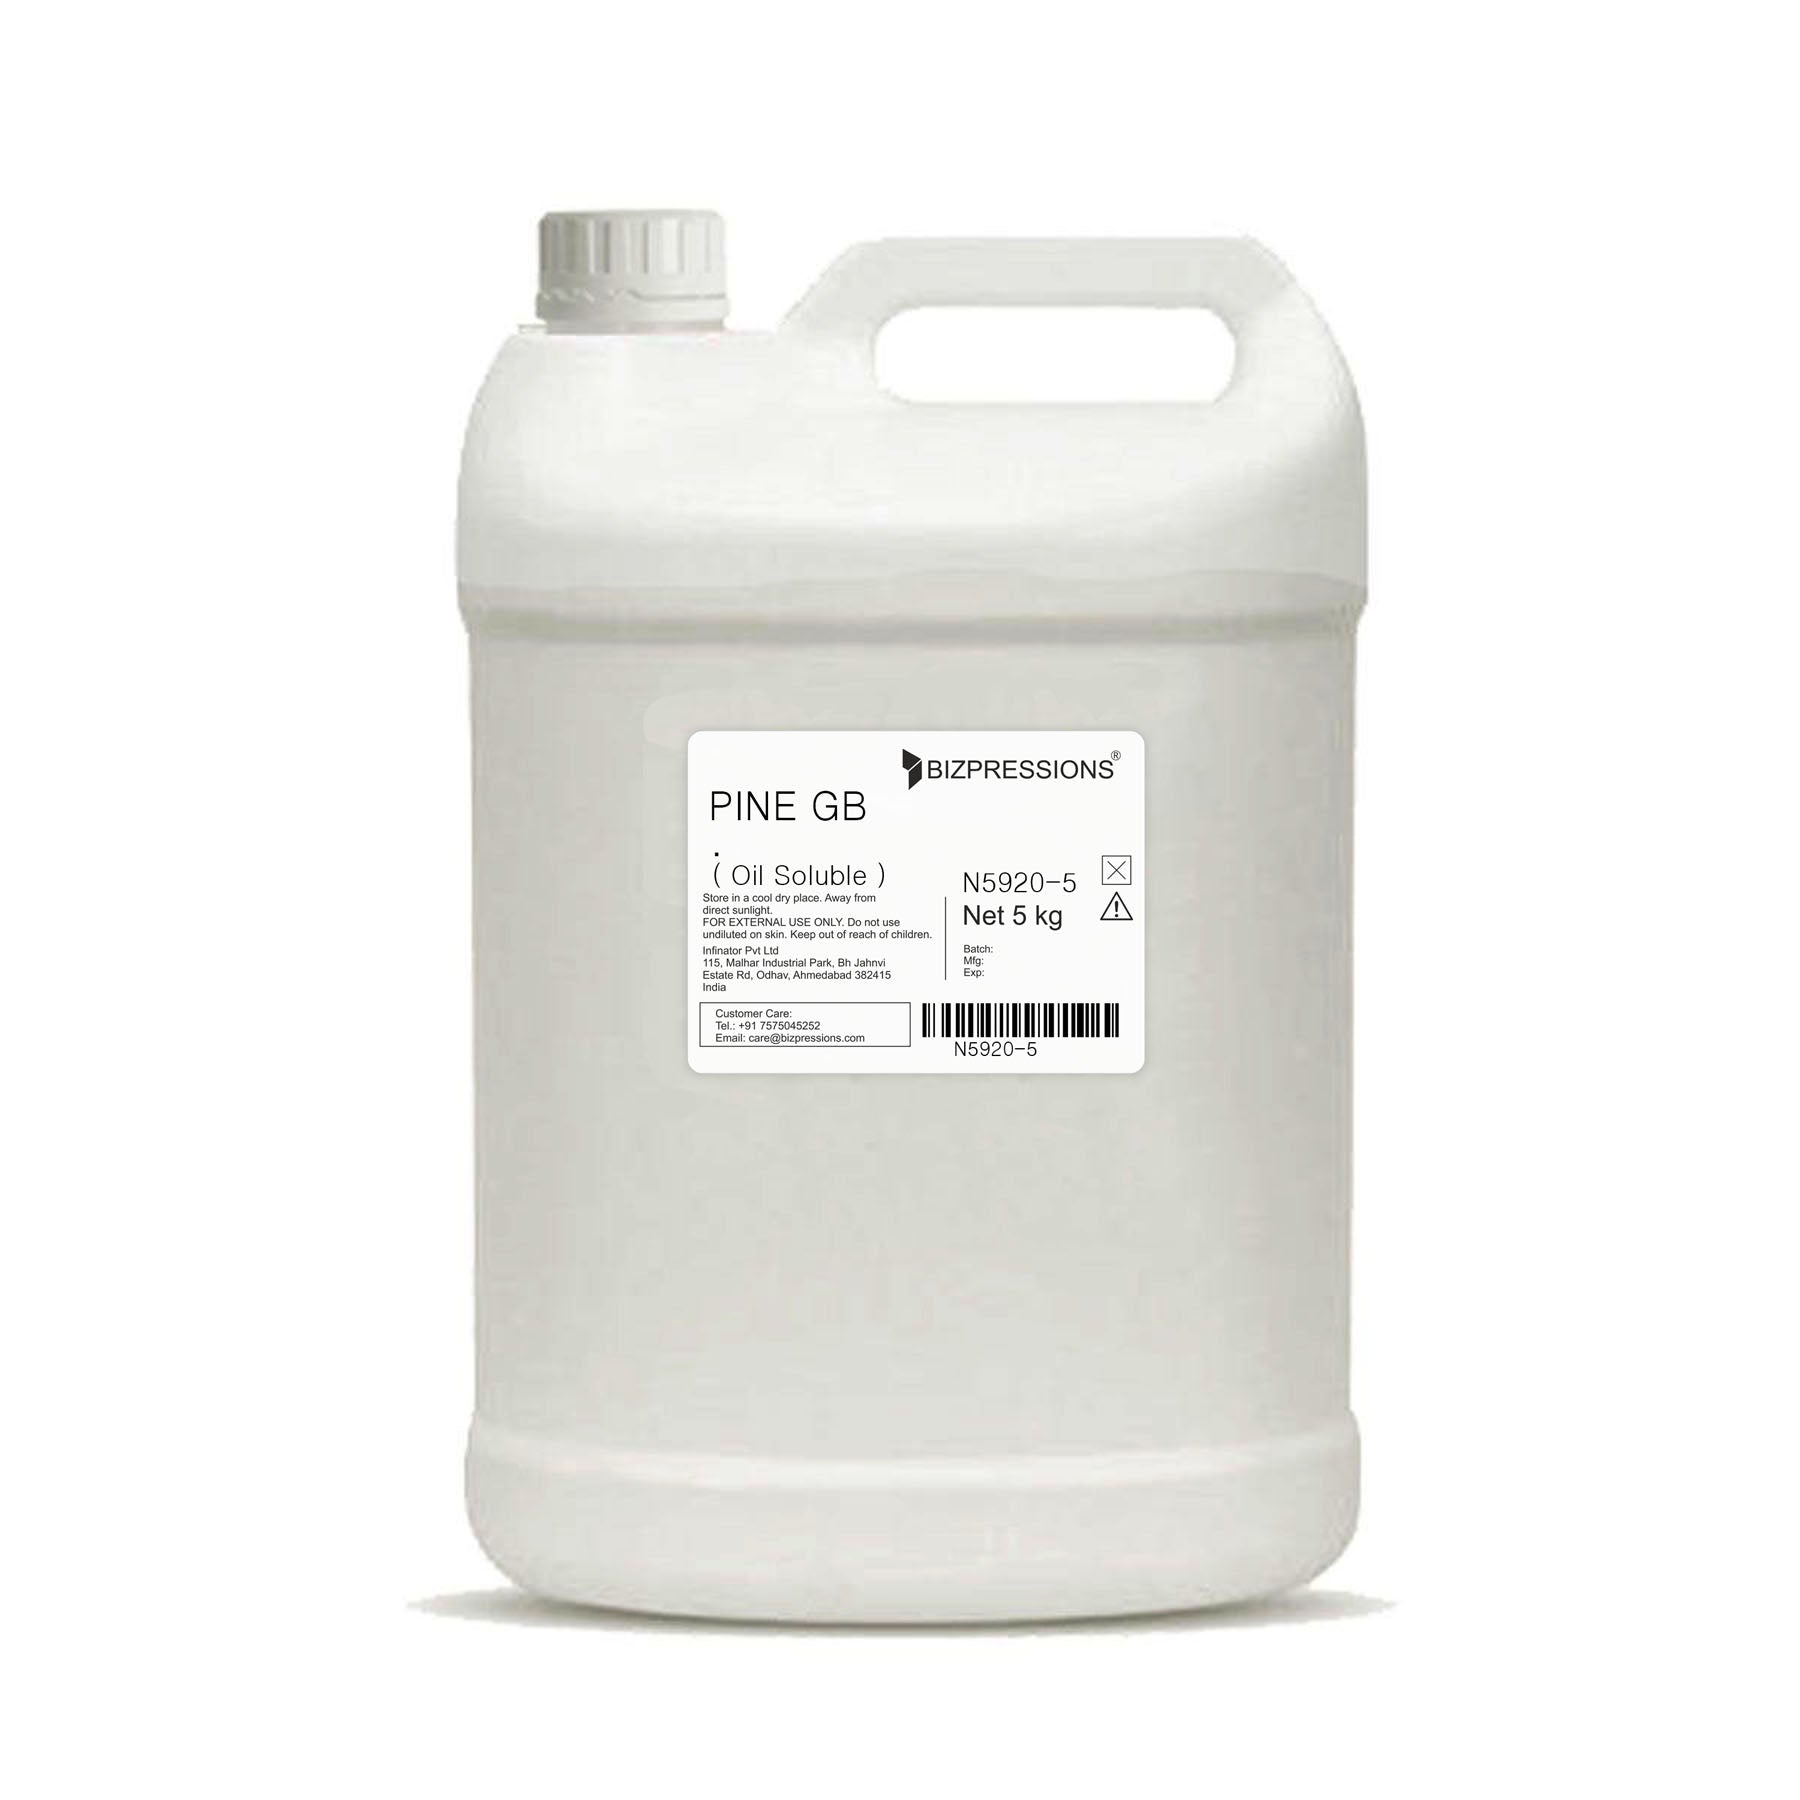 PINE GB - Fragrance ( Oil Soluble ) - 5 kg